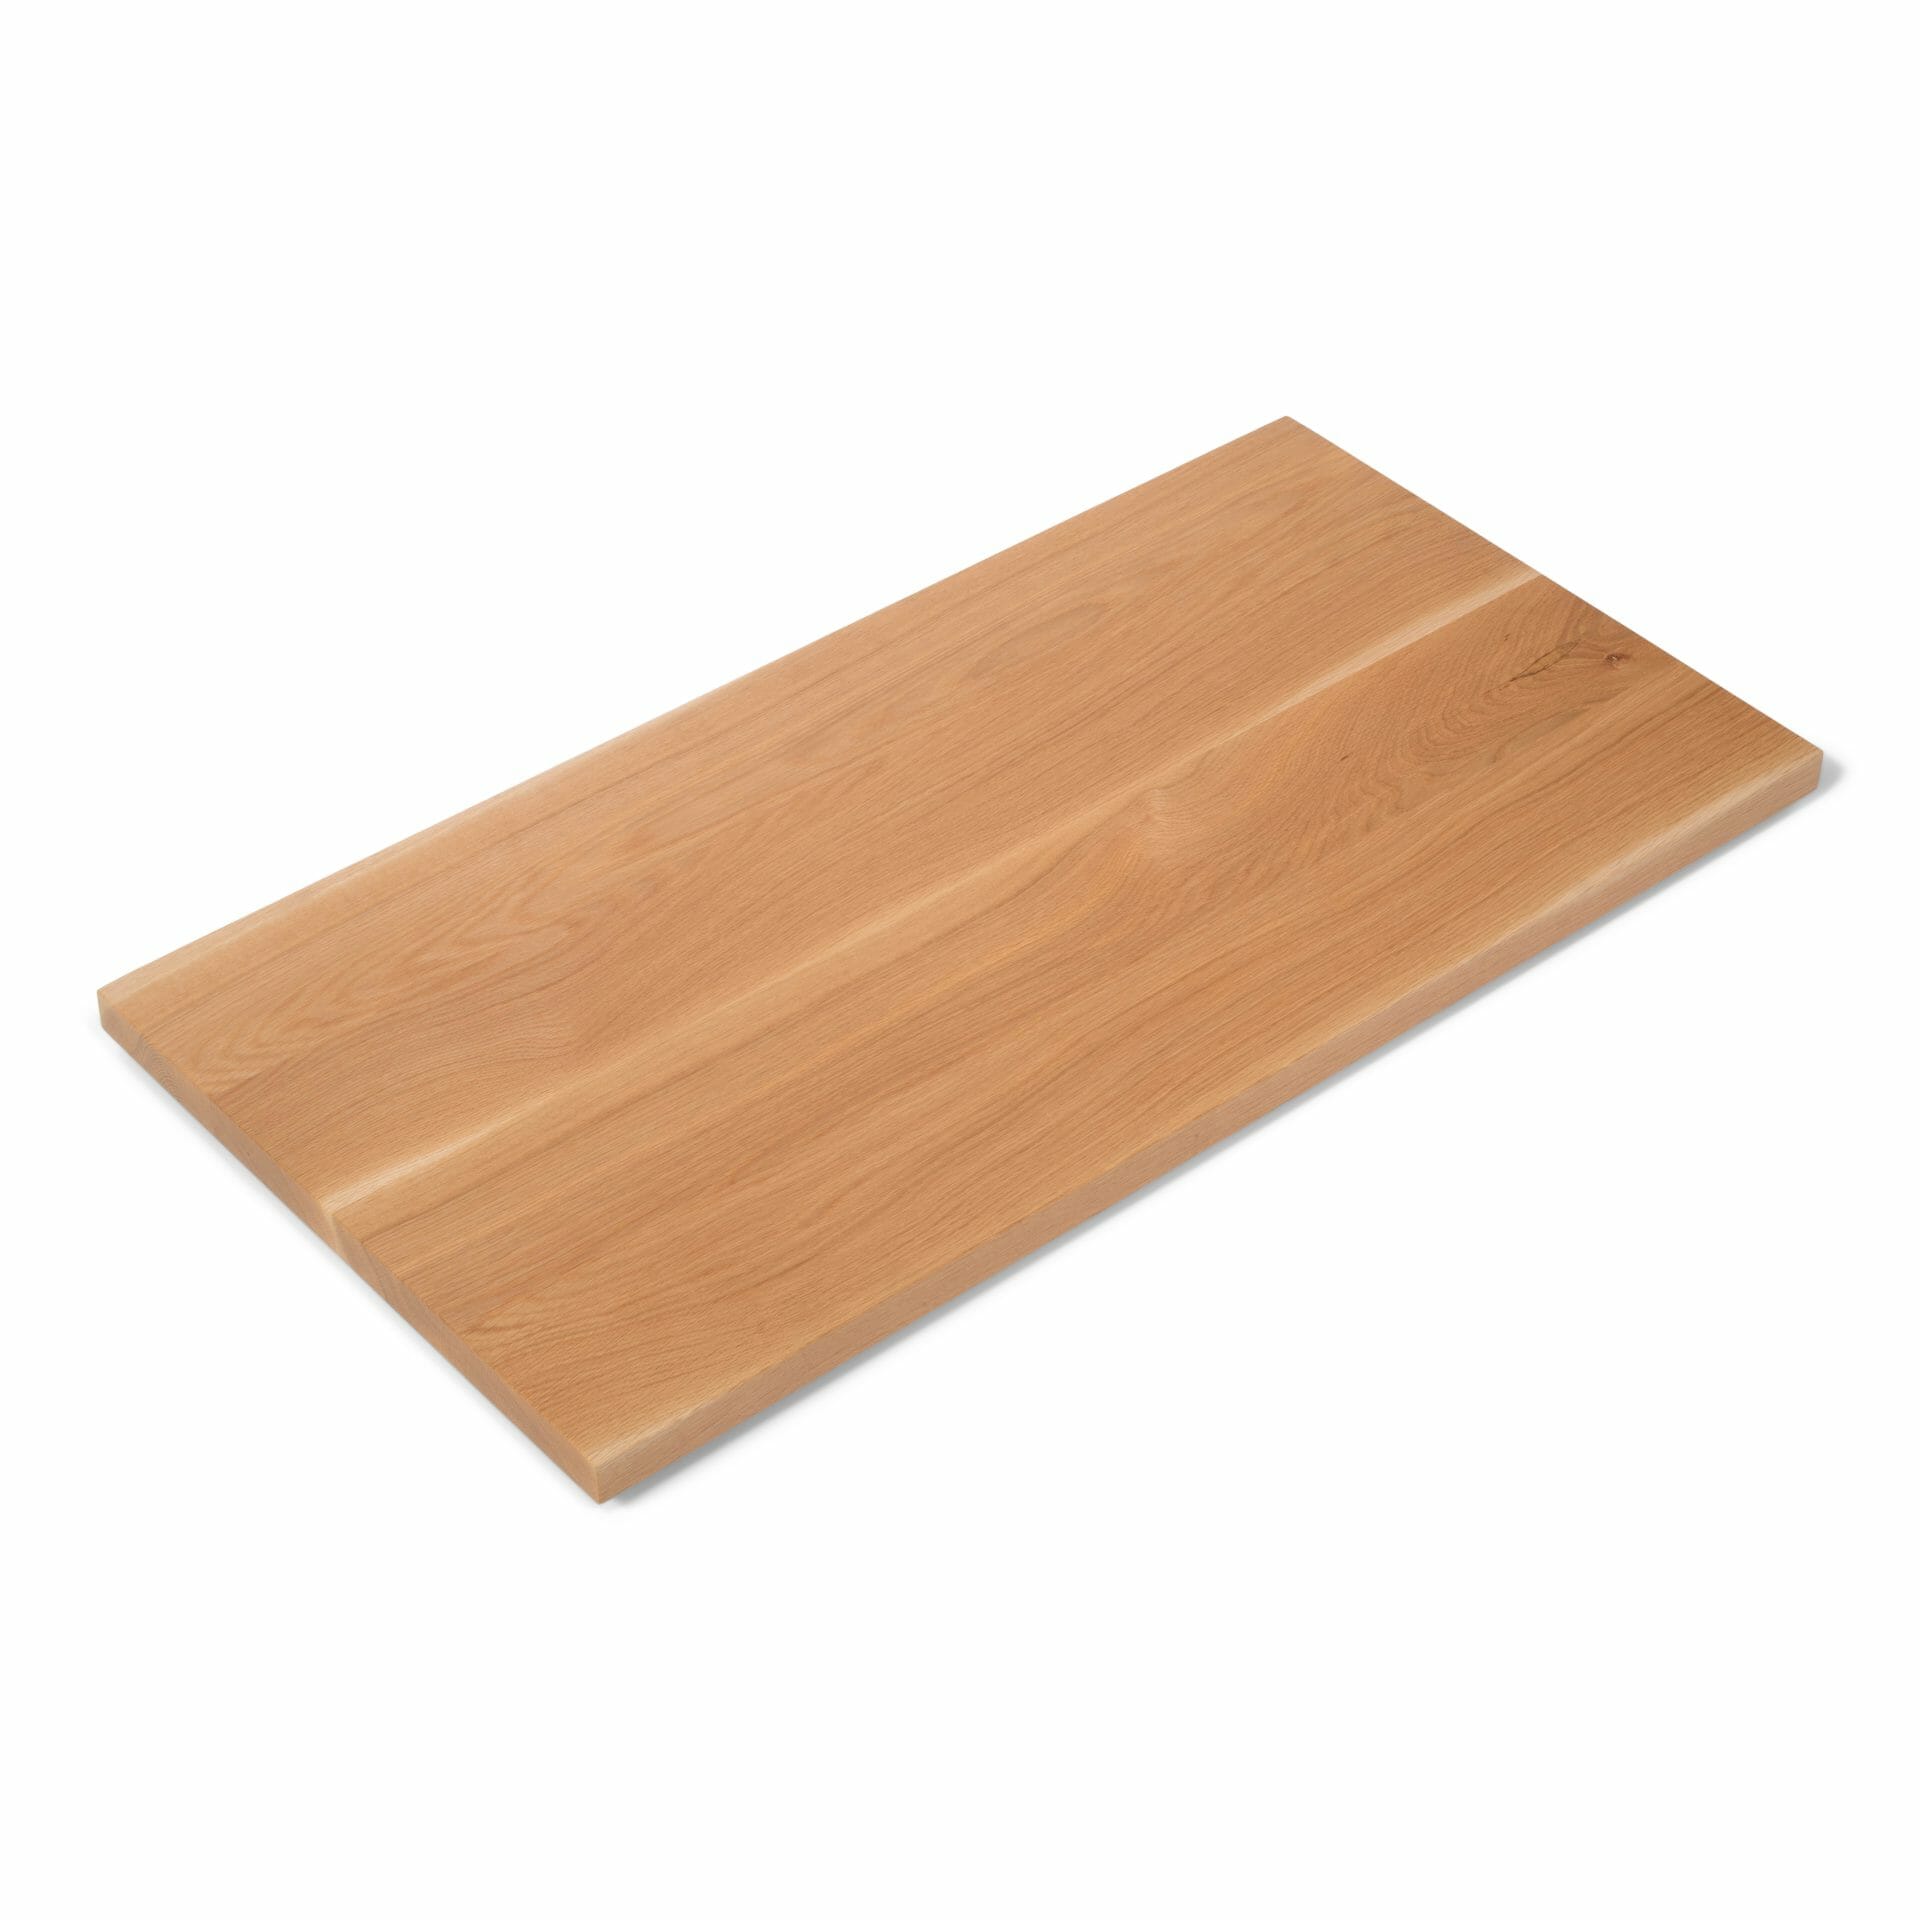 white oak wood countertop table top